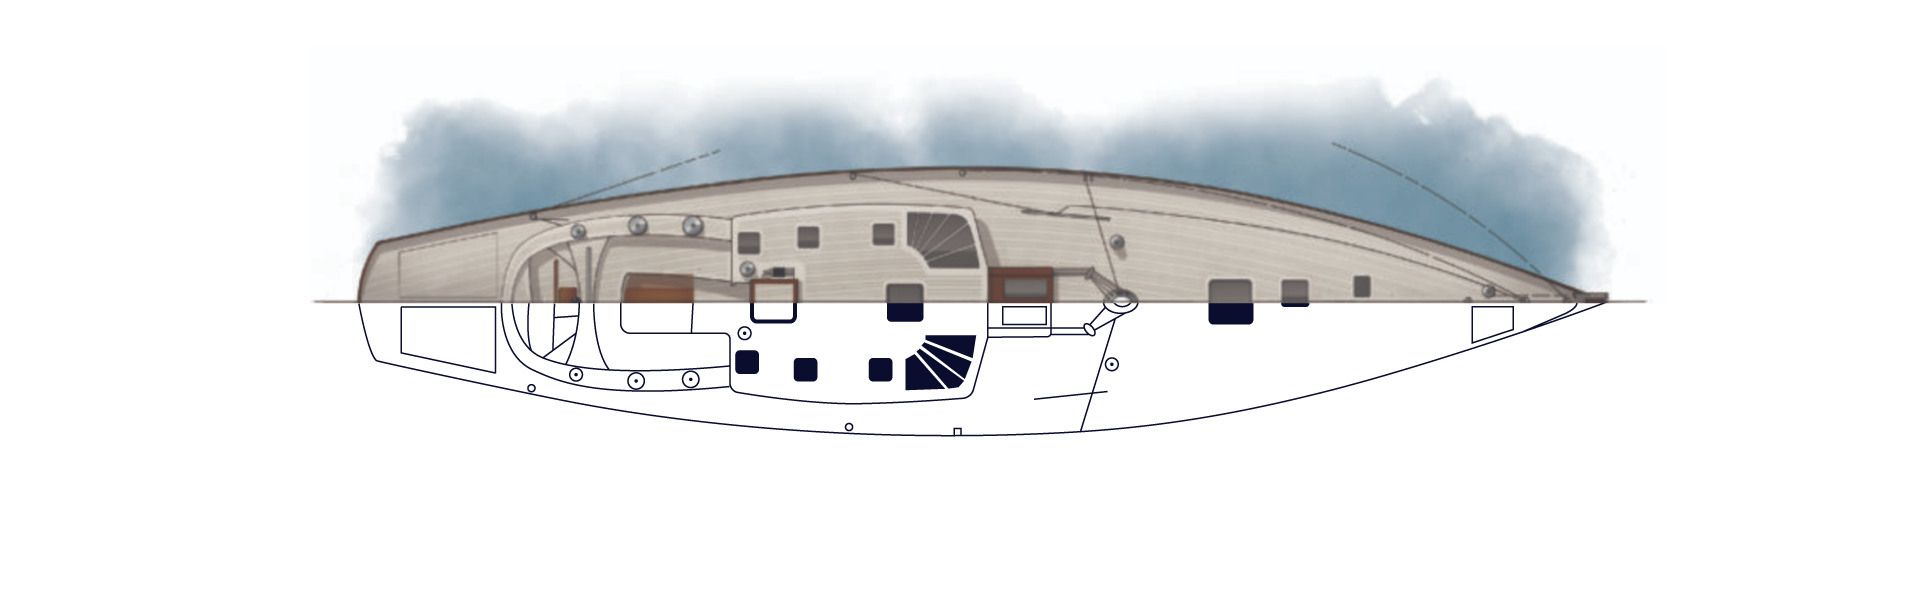 Yacht-Sketch-Above-Deck